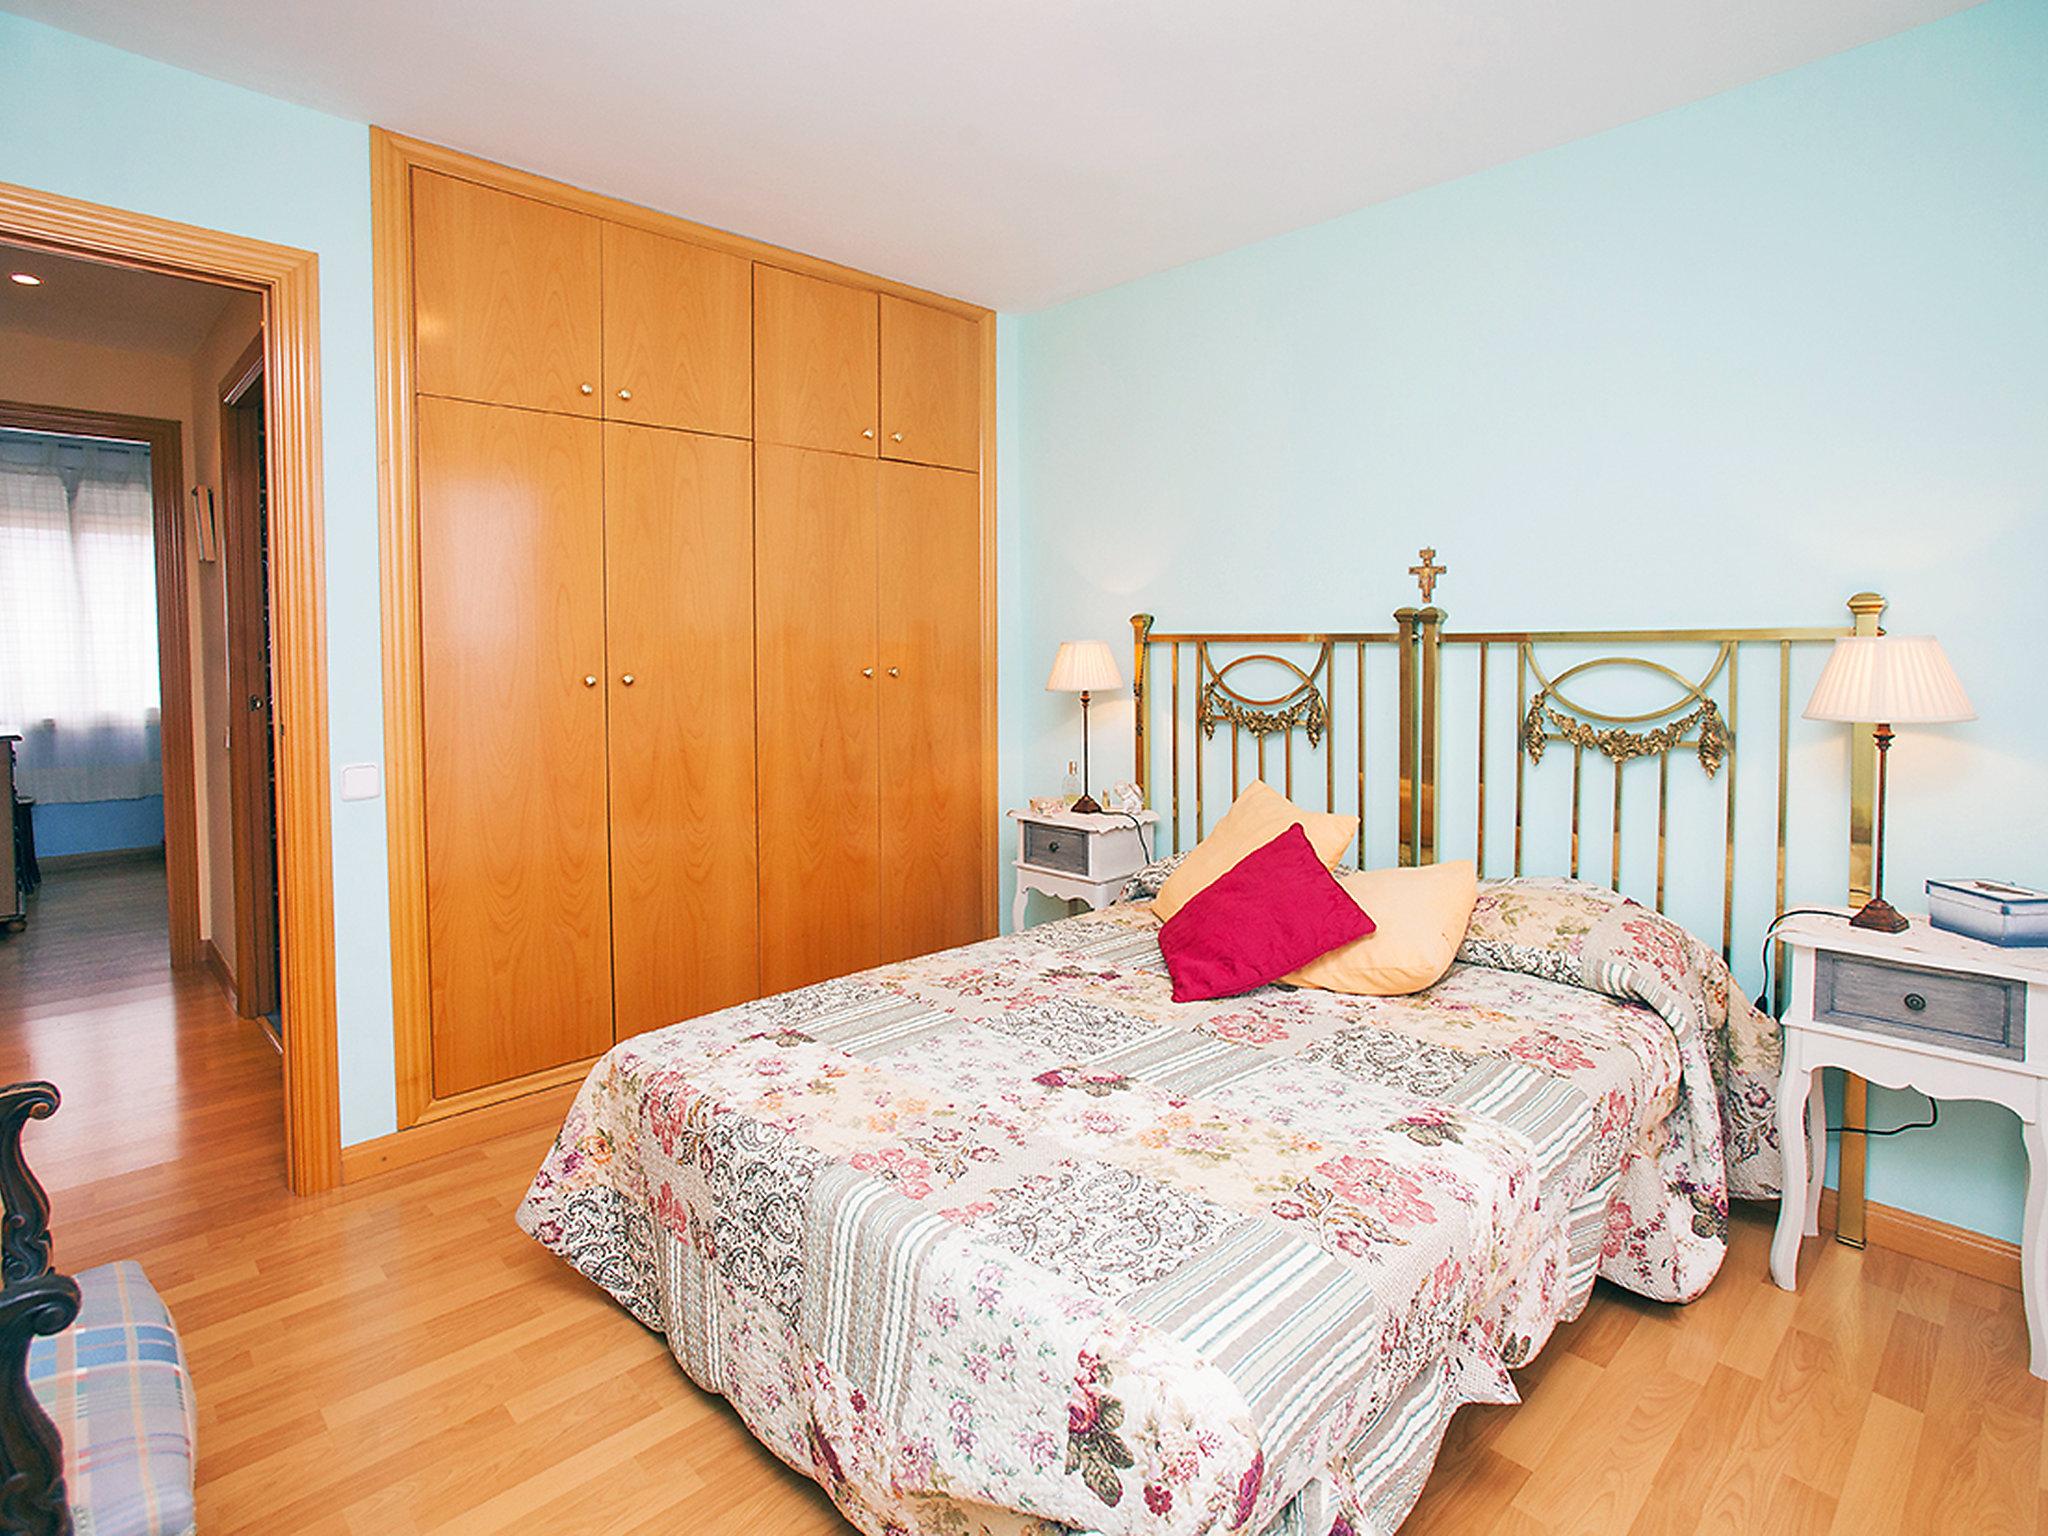 Foto 4 - Appartamento con 2 camere da letto a Sant Andreu de Llavaneres con piscina e giardino